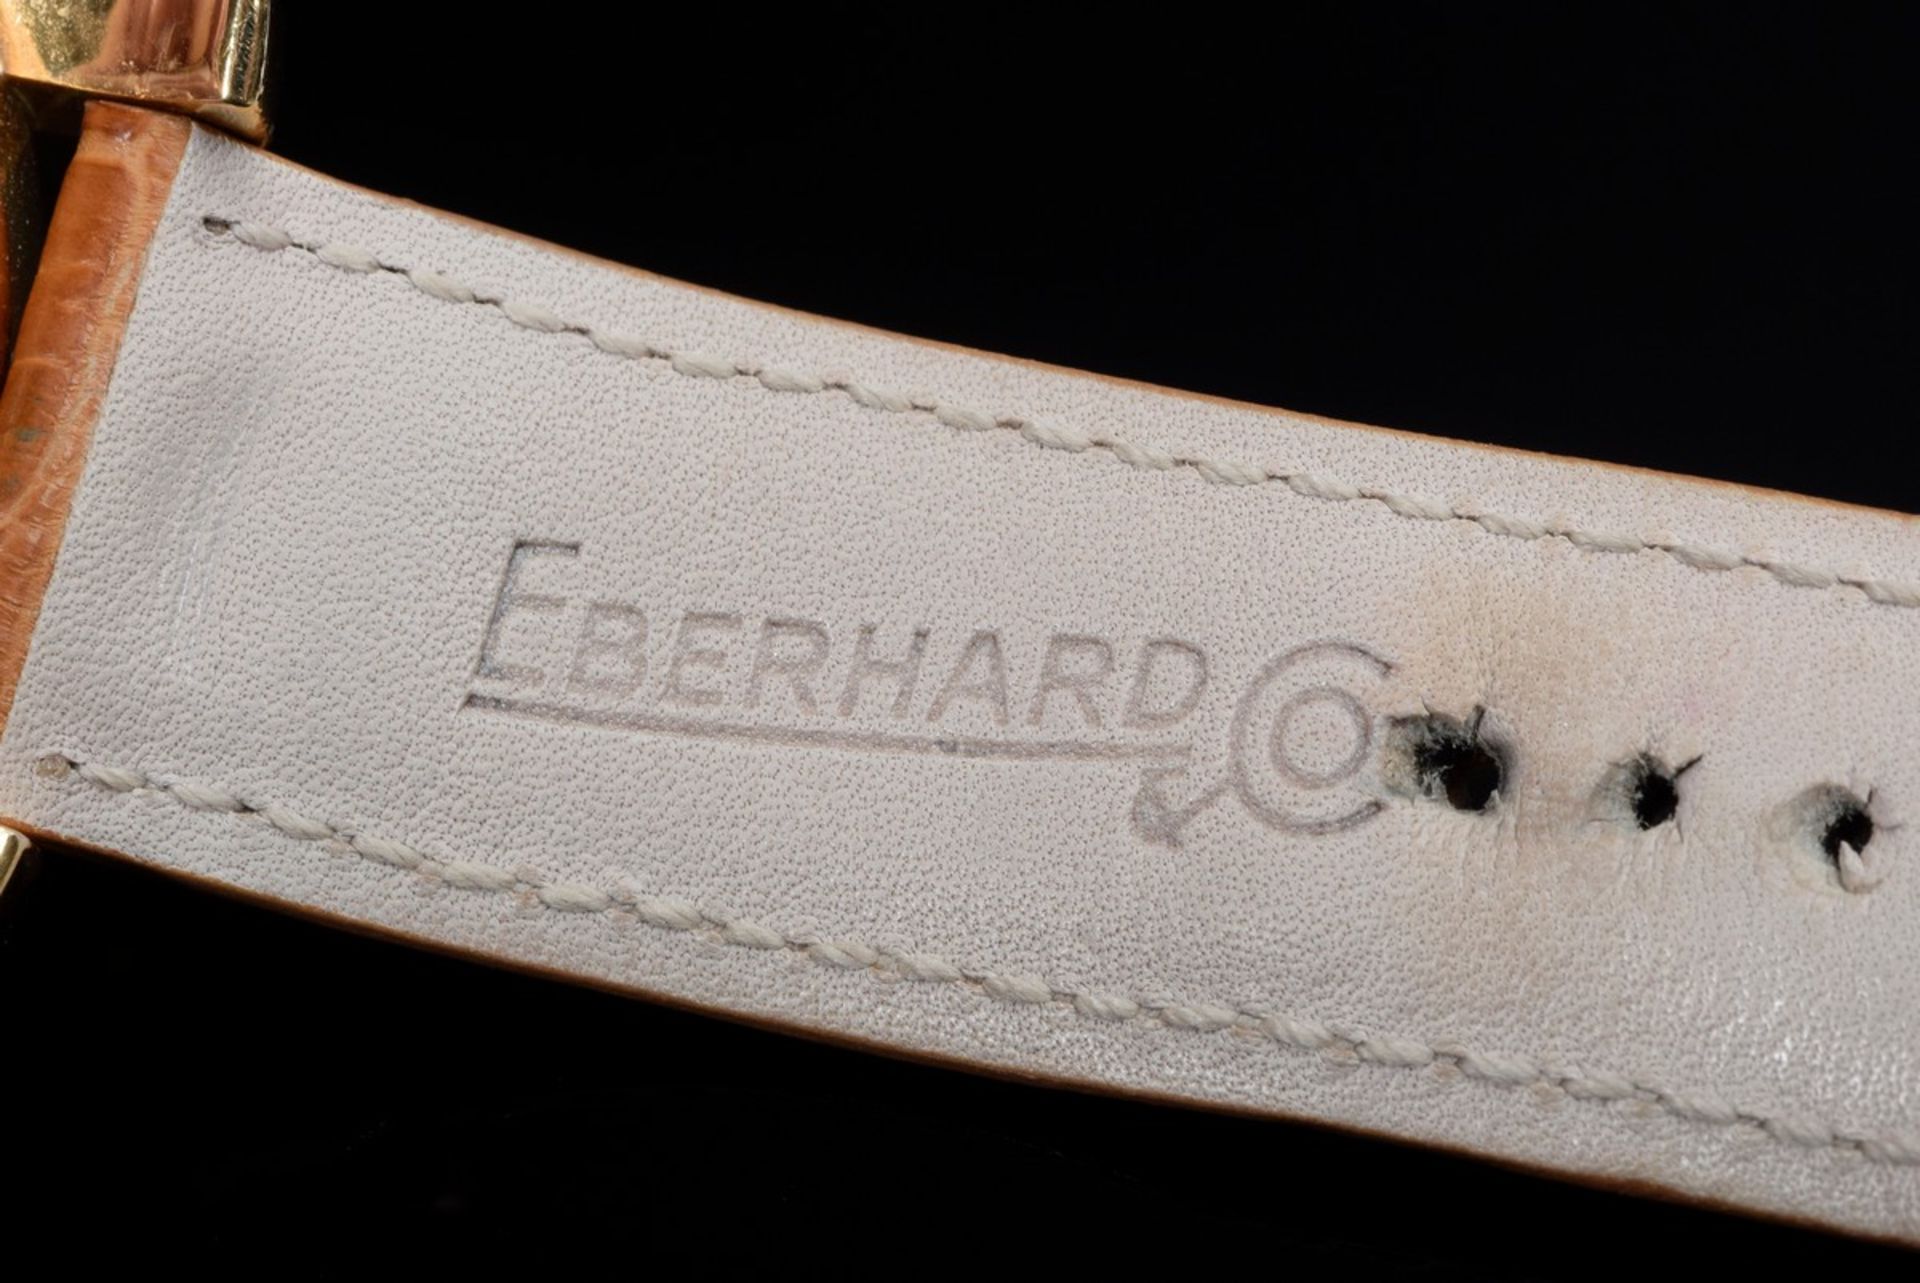 GG 750 Eberhard & Co "Crone 4" Herrenarmbanduhr, No. 1015, Chronograph, Saphirg - Bild 5 aus 9